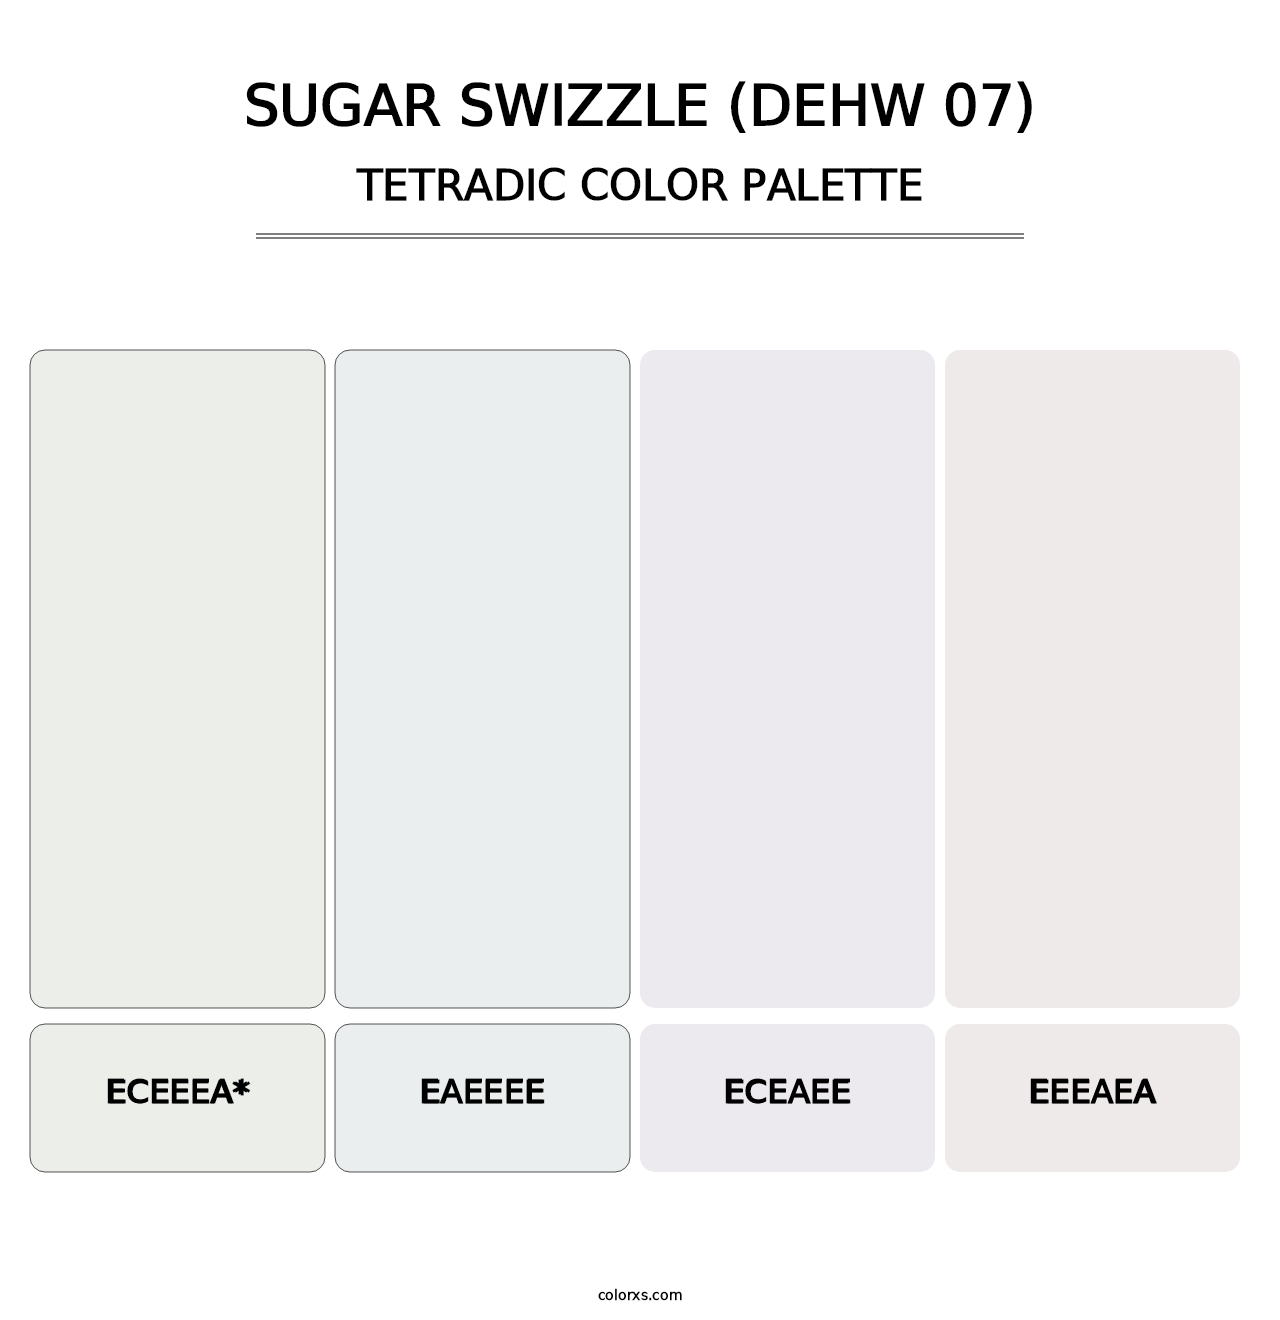 Sugar Swizzle (DEHW 07) - Tetradic Color Palette